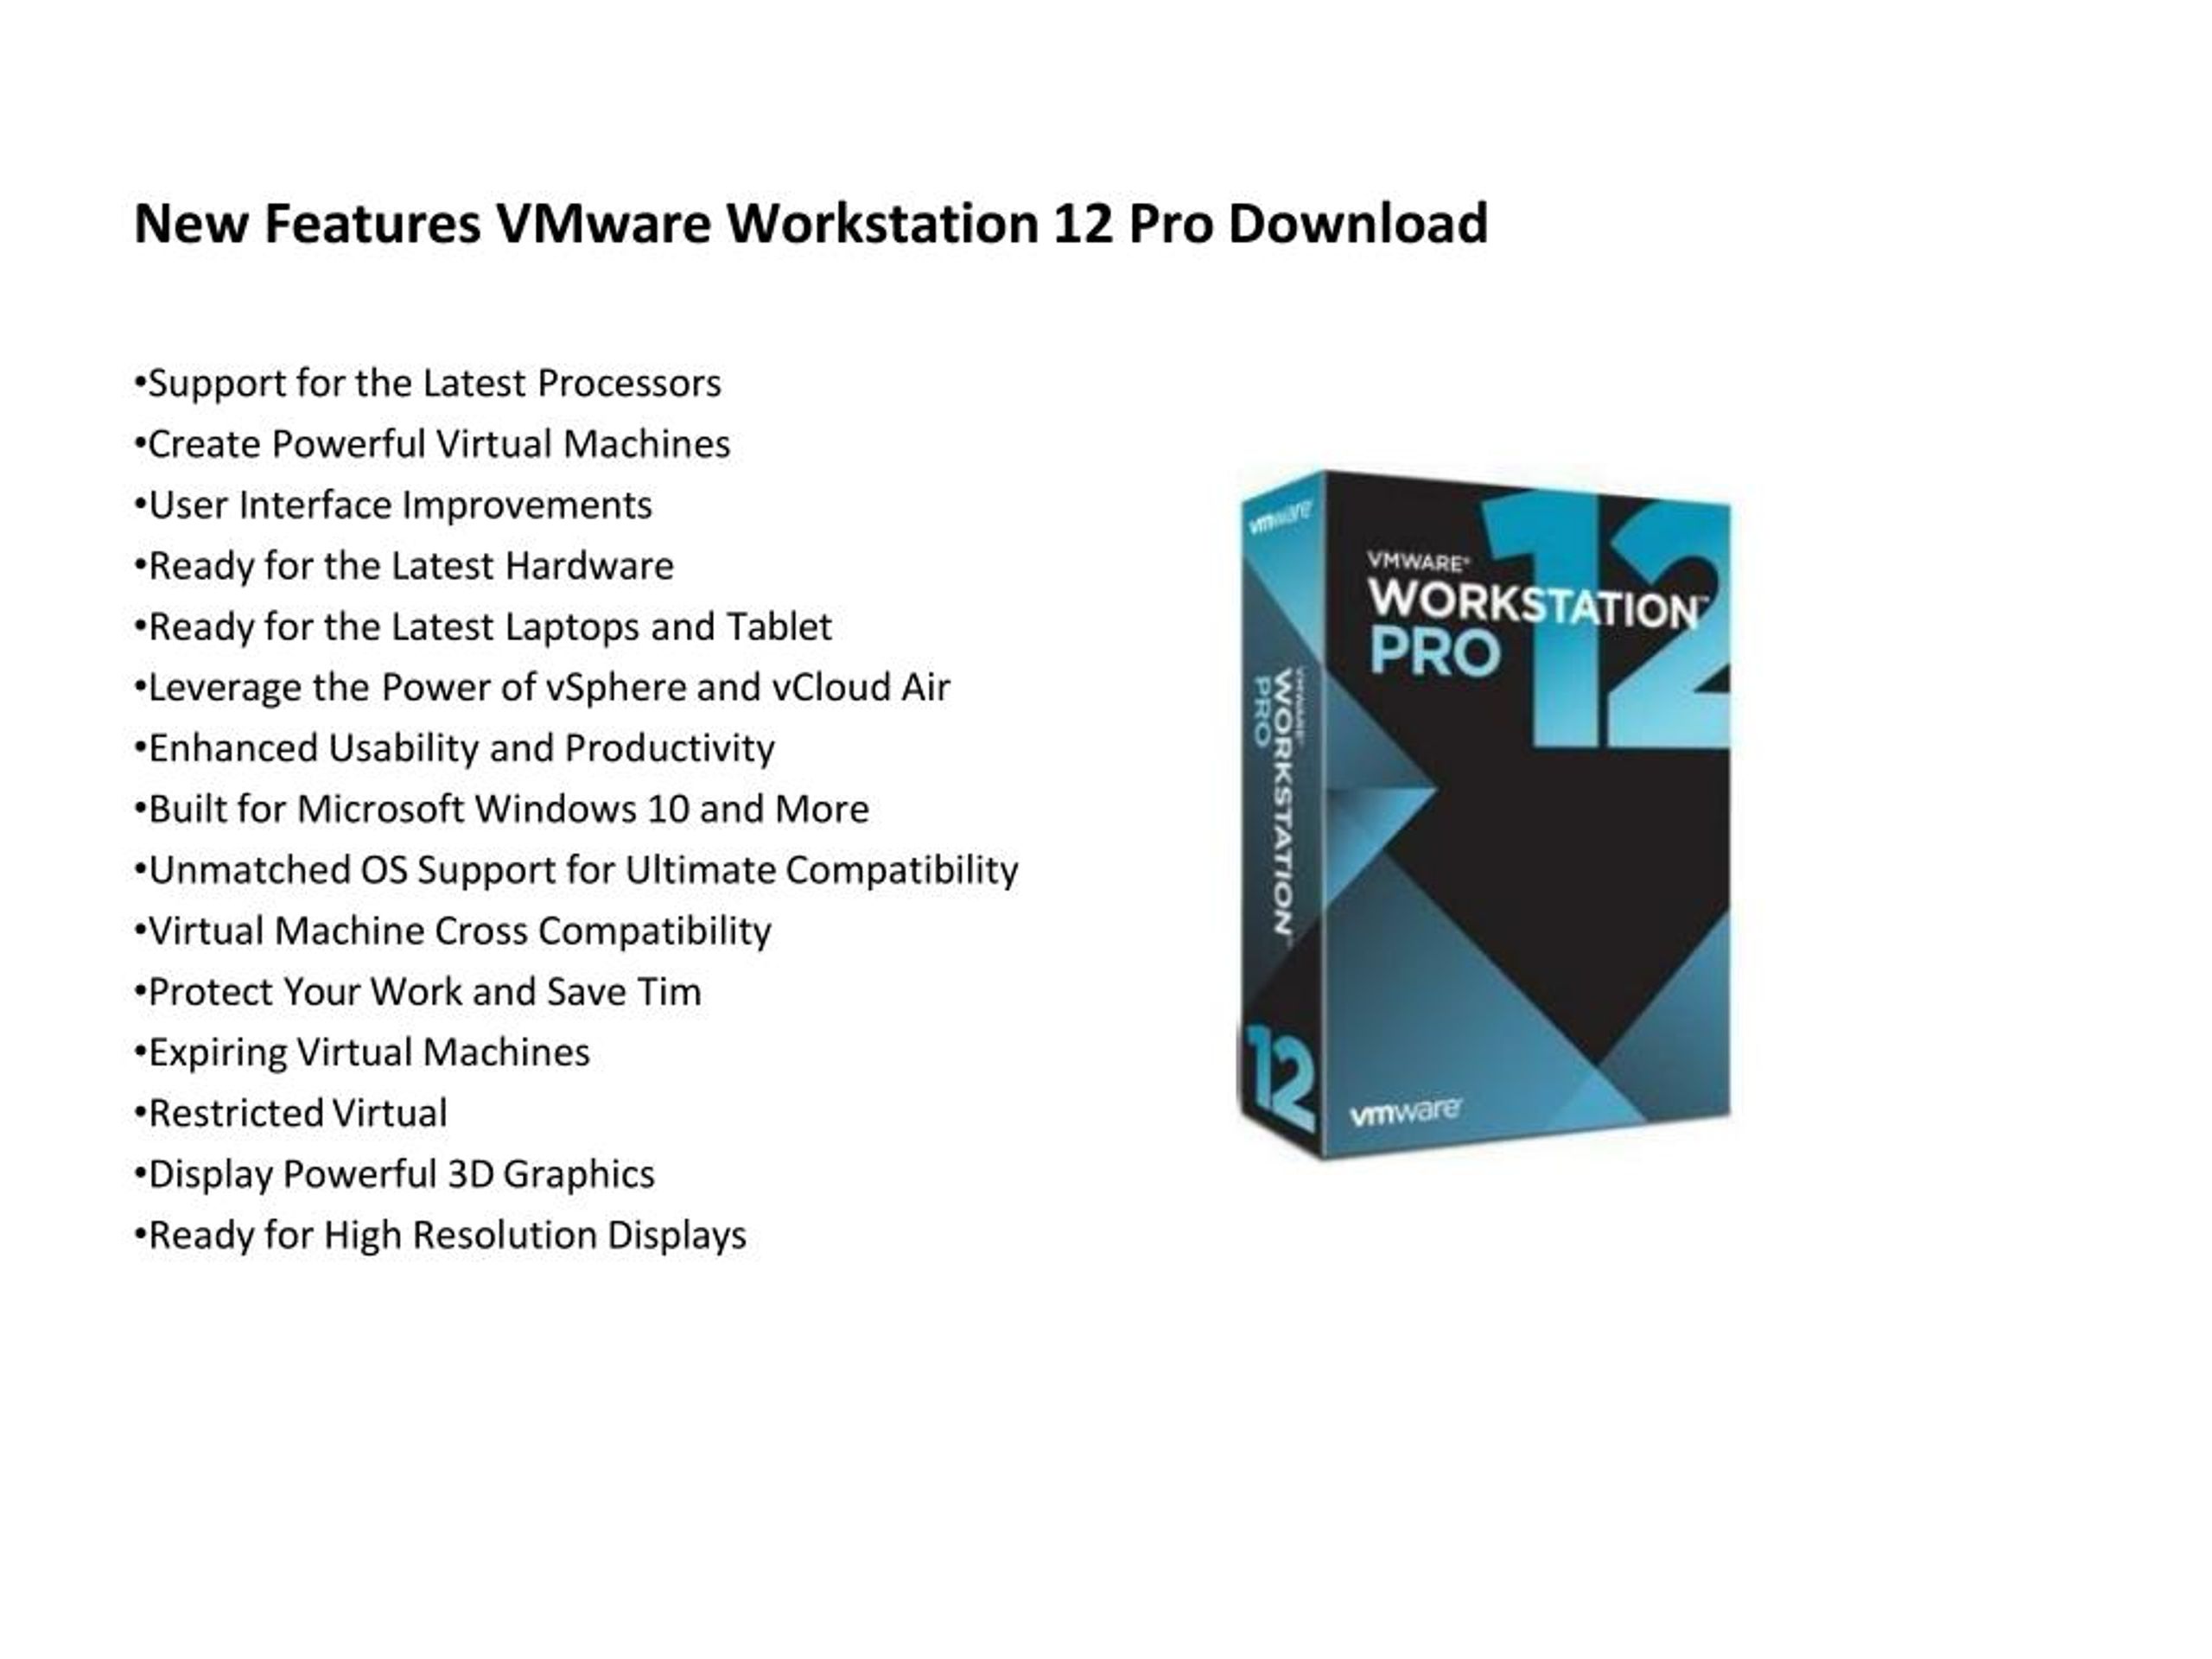 vmware workstation pro 12 key